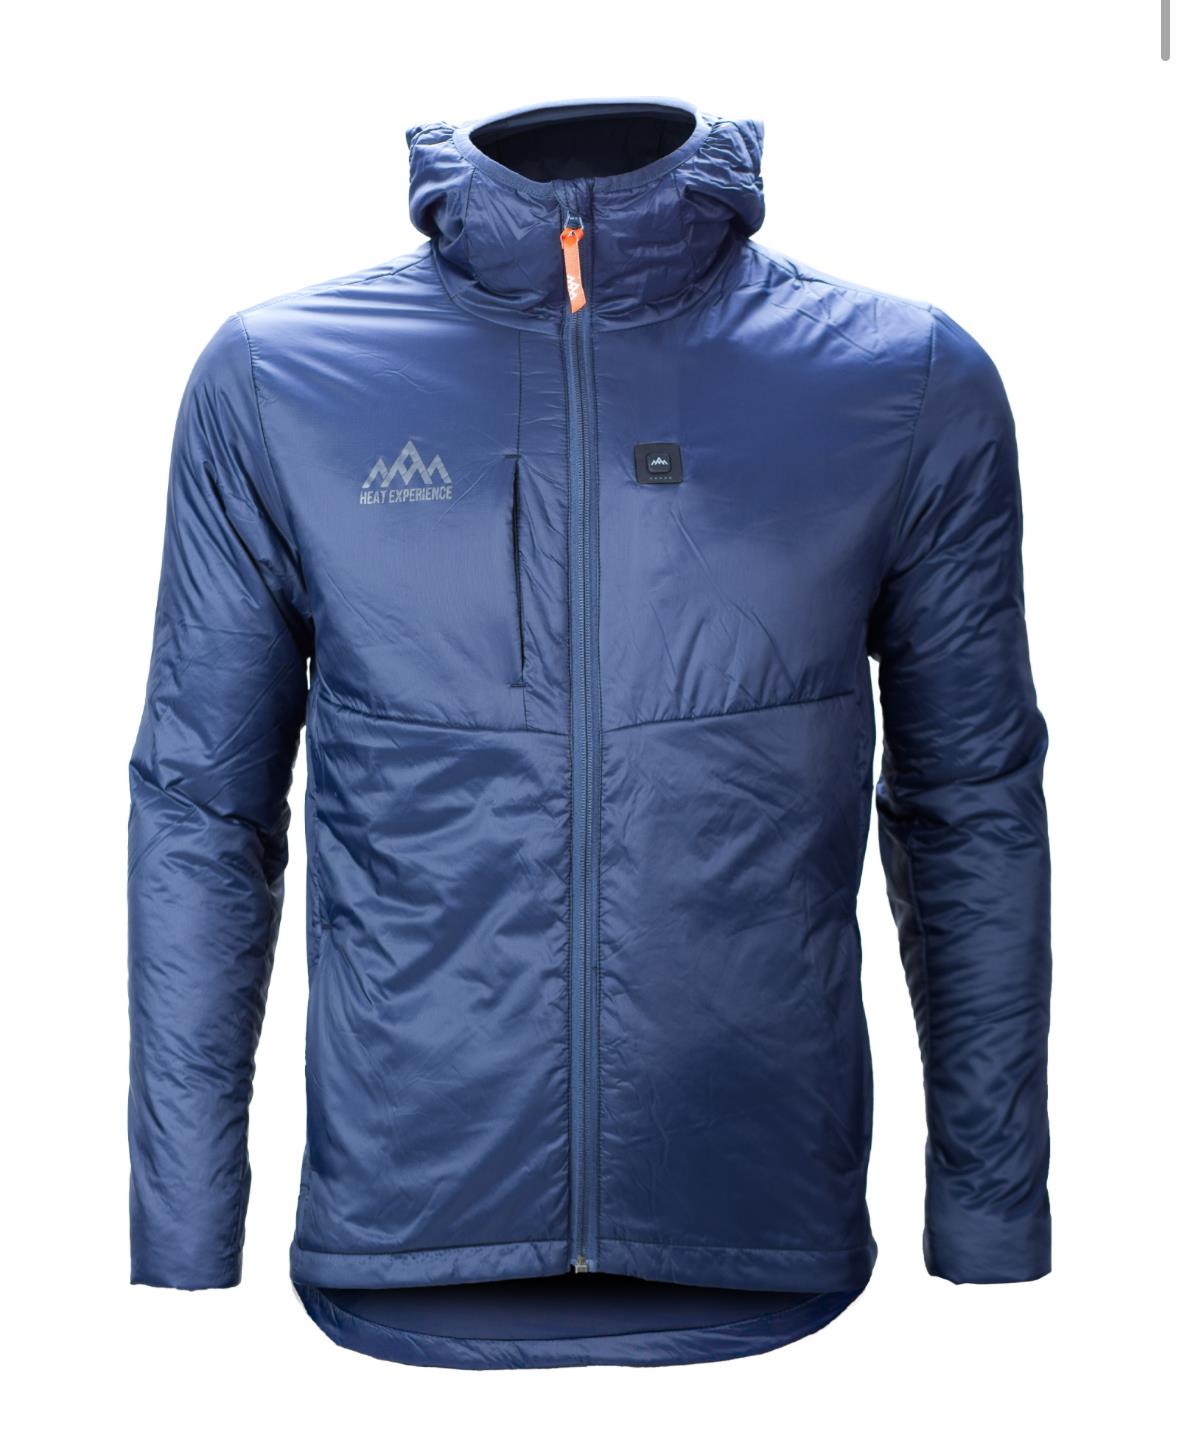 HeatX Hybrid Мужская куртка с подогревом, темно-синяя, L